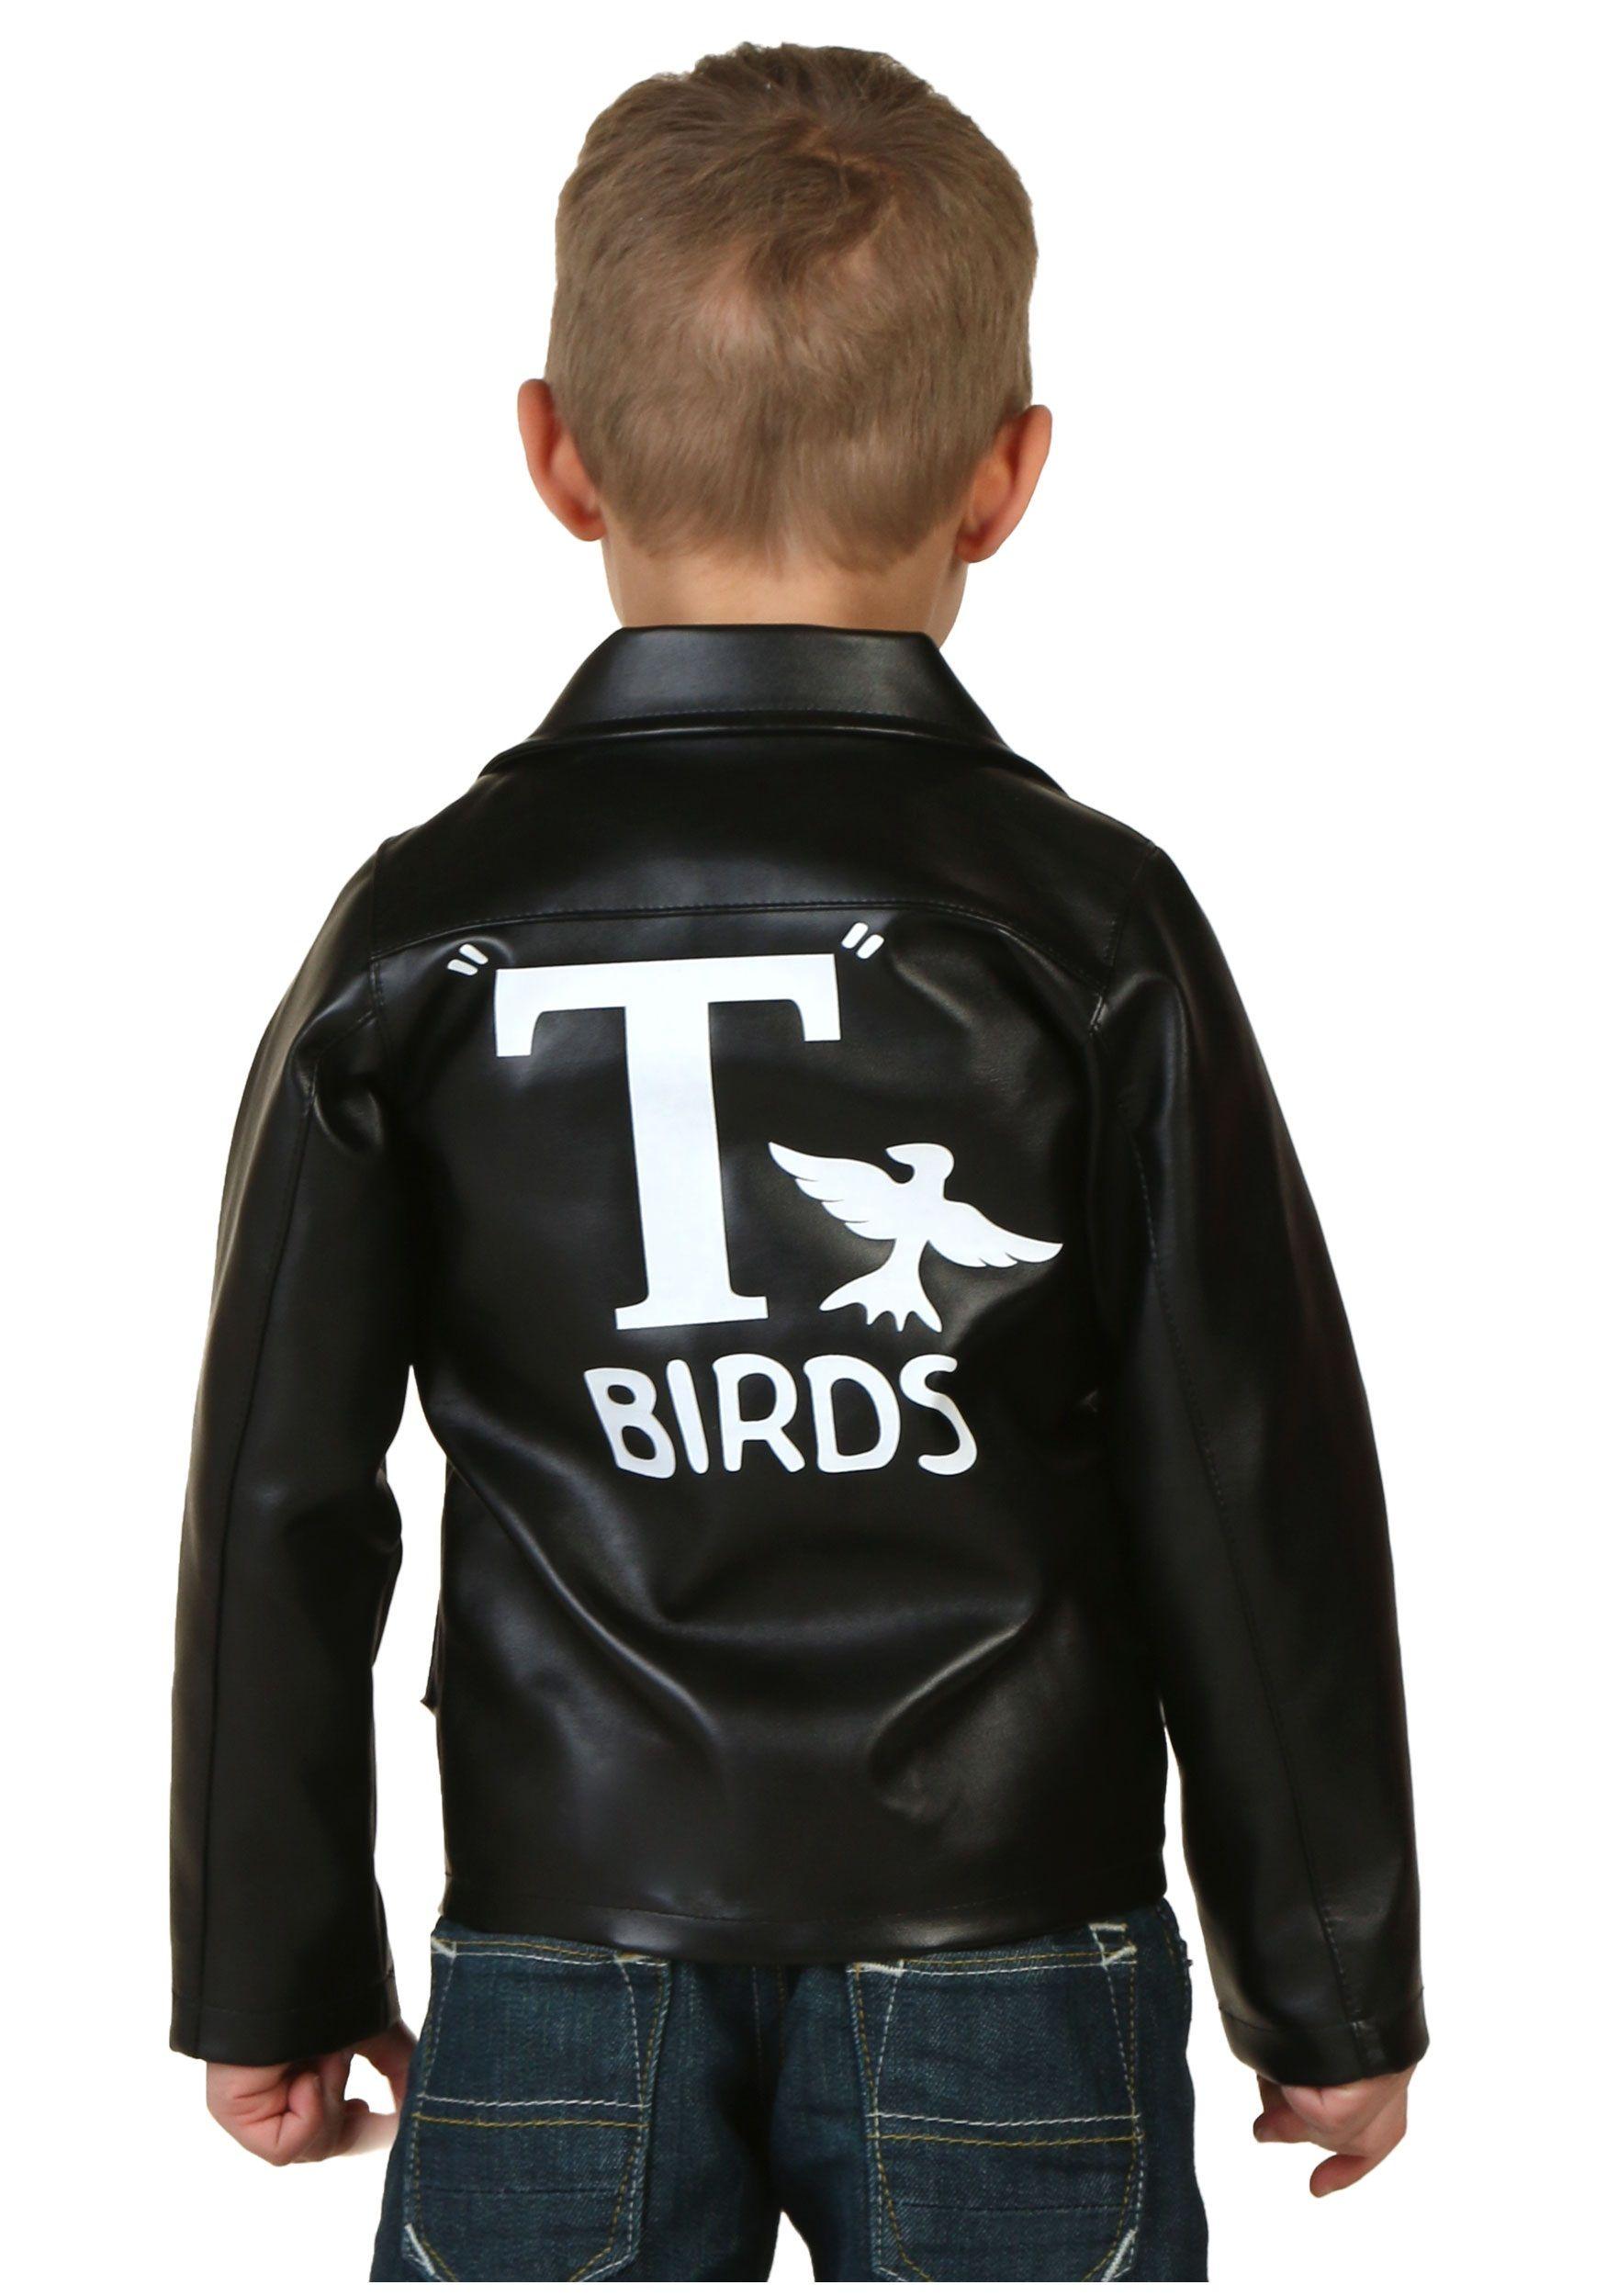 T- Birds Logo - Toddler Grease T Birds Jacket Costume